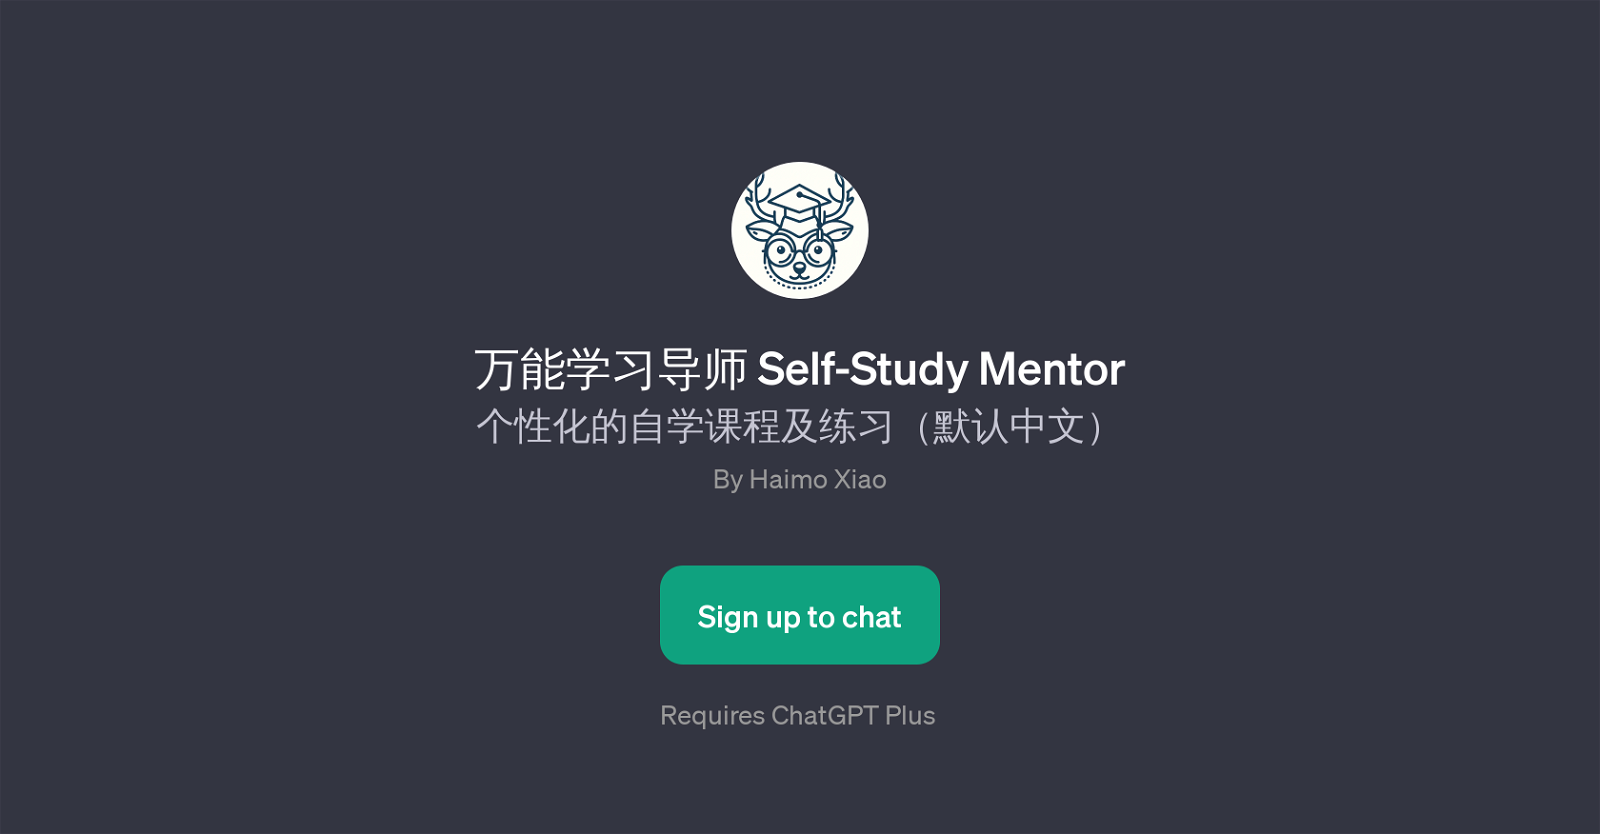 Self-Study Mentor website